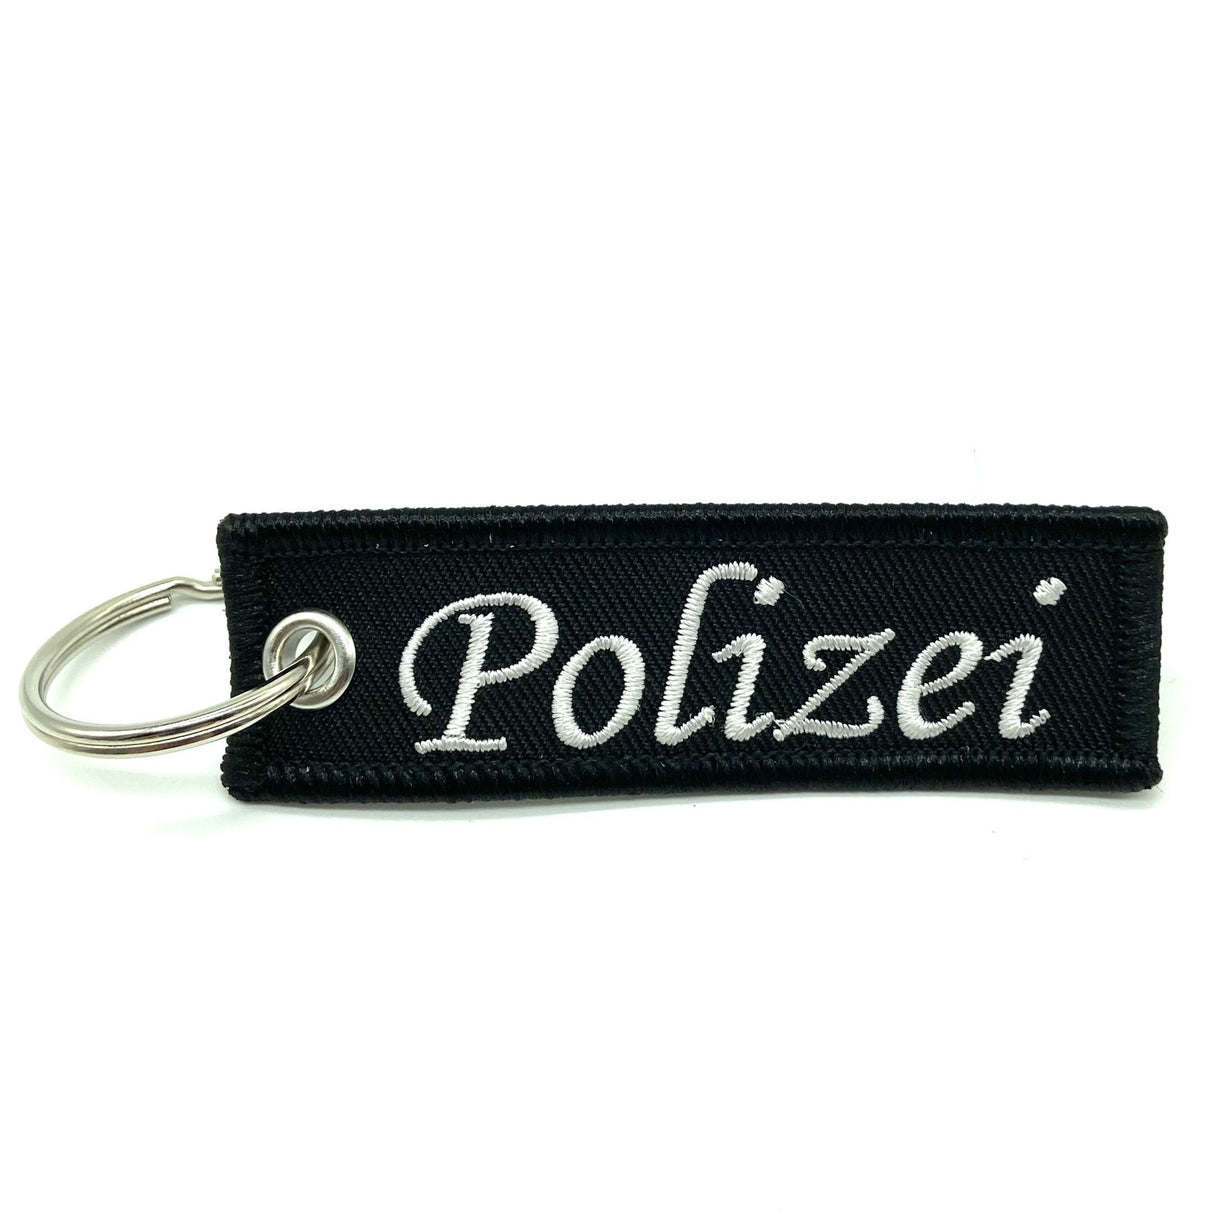 Police keychain textile